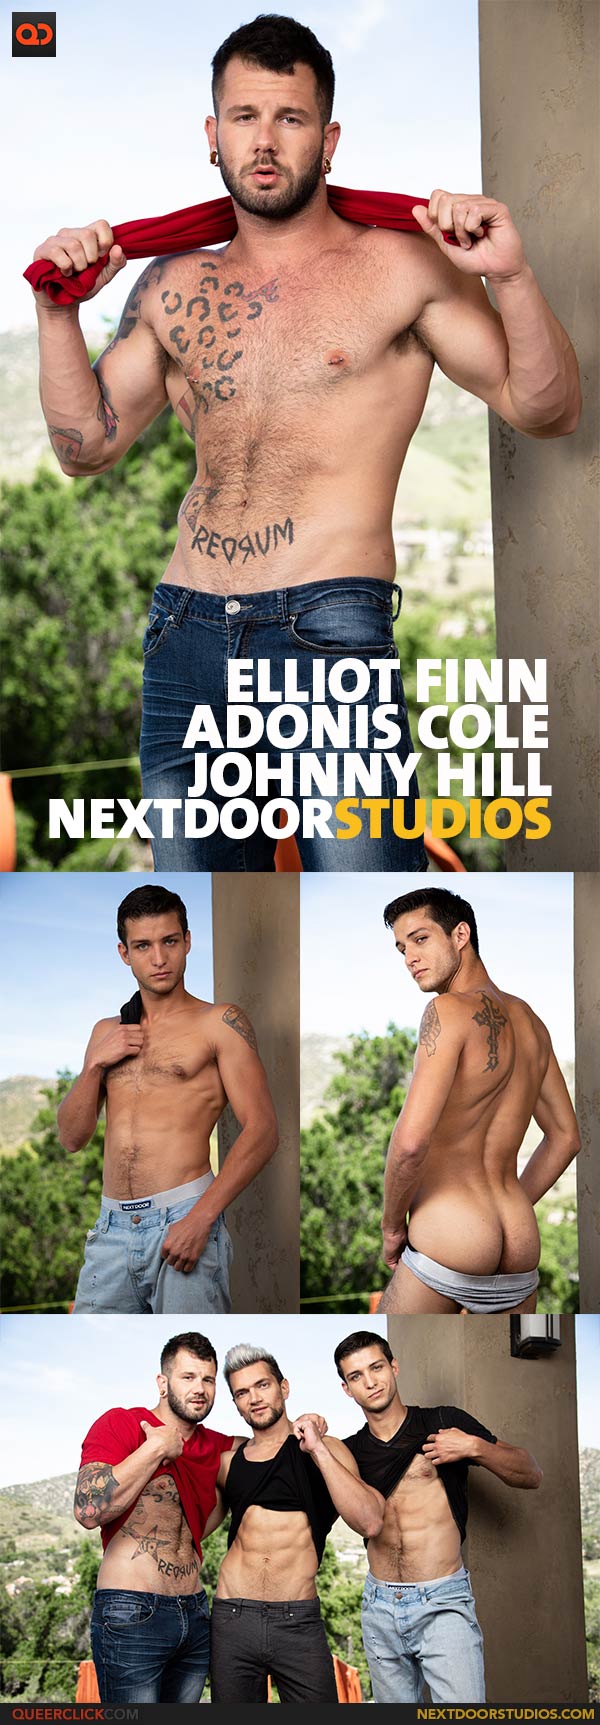 Next Door Studios:  Johnny Hill, Adonis Cole and Elliot Finn